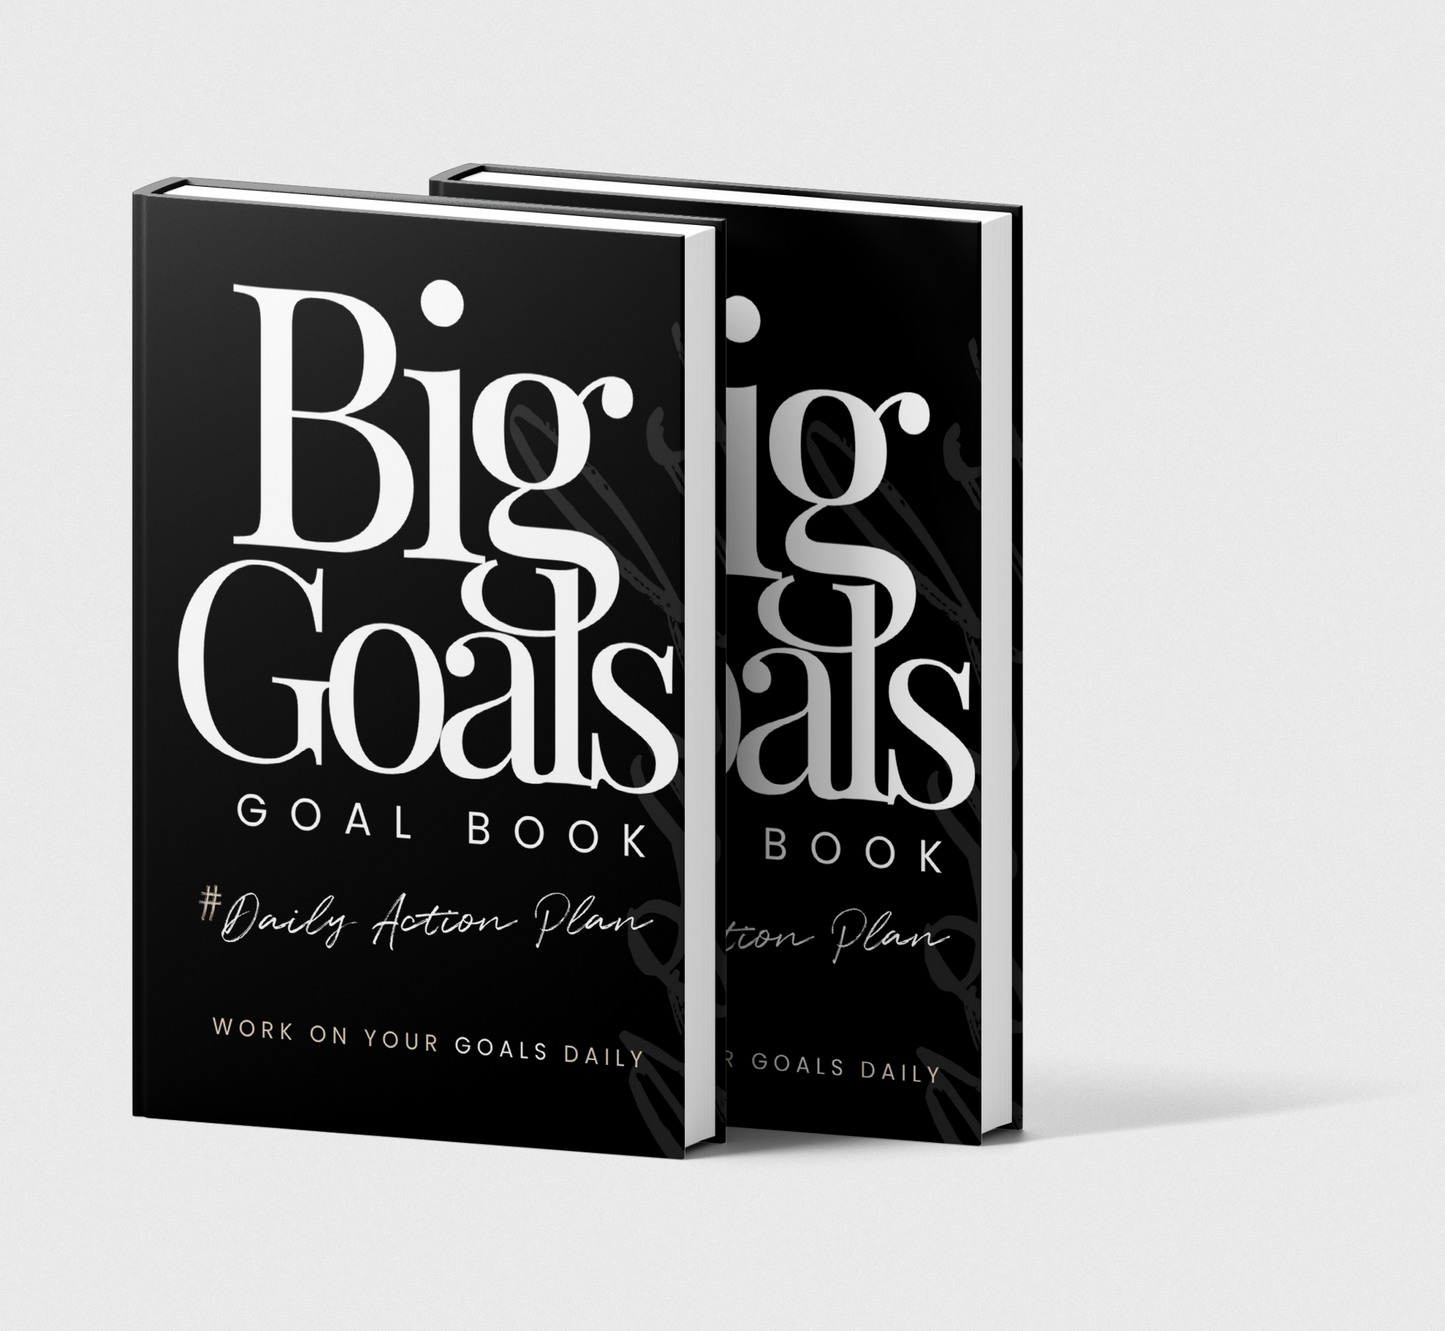 Big Goals Goal Book: Daily Action Plan